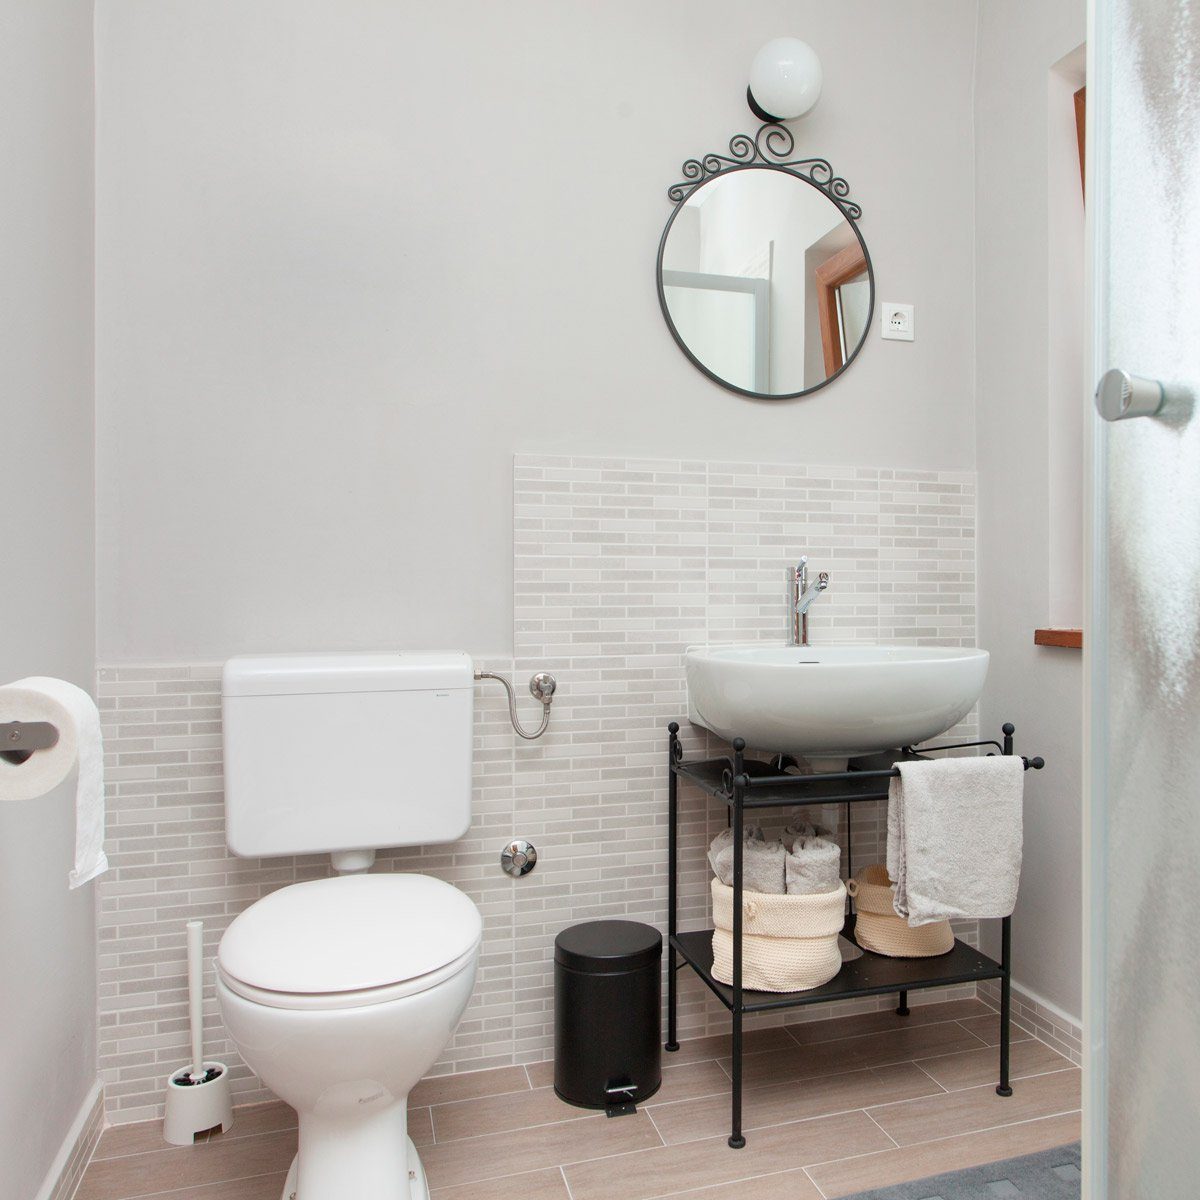 10 Small  Bathroom  Ideas  That Make a Big Impact Reader s 